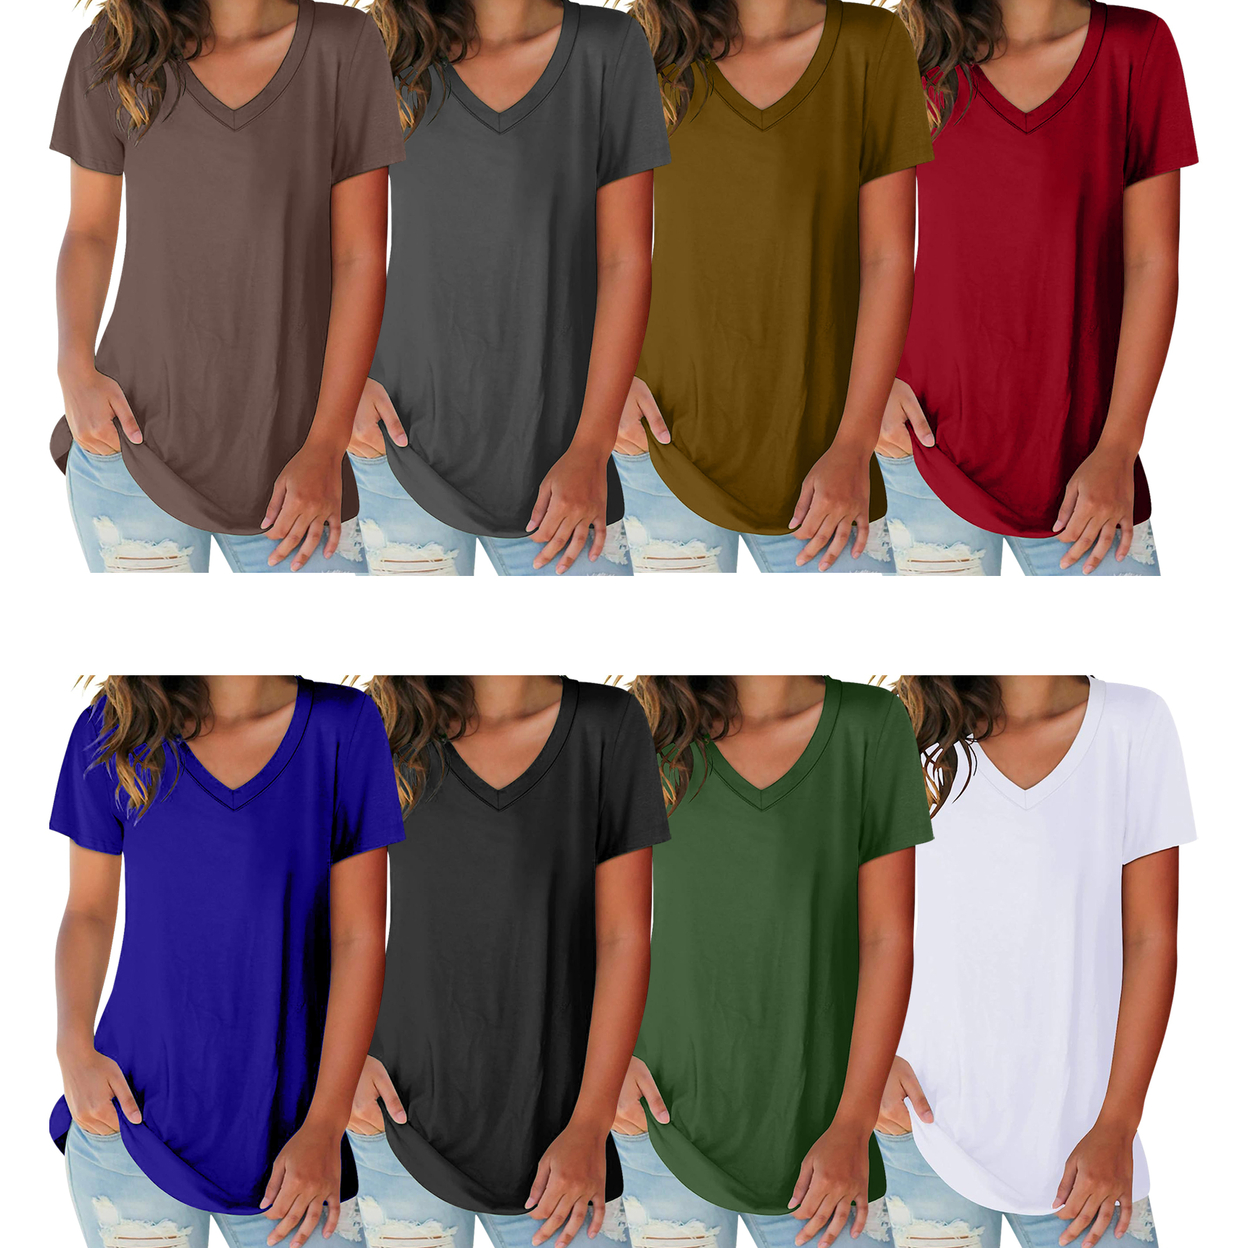 3-Pack: Women's Ultra Soft Smooth Cotton Blend Basic V-Neck Short Sleeve Shirts - Black, Grey, Green, Large